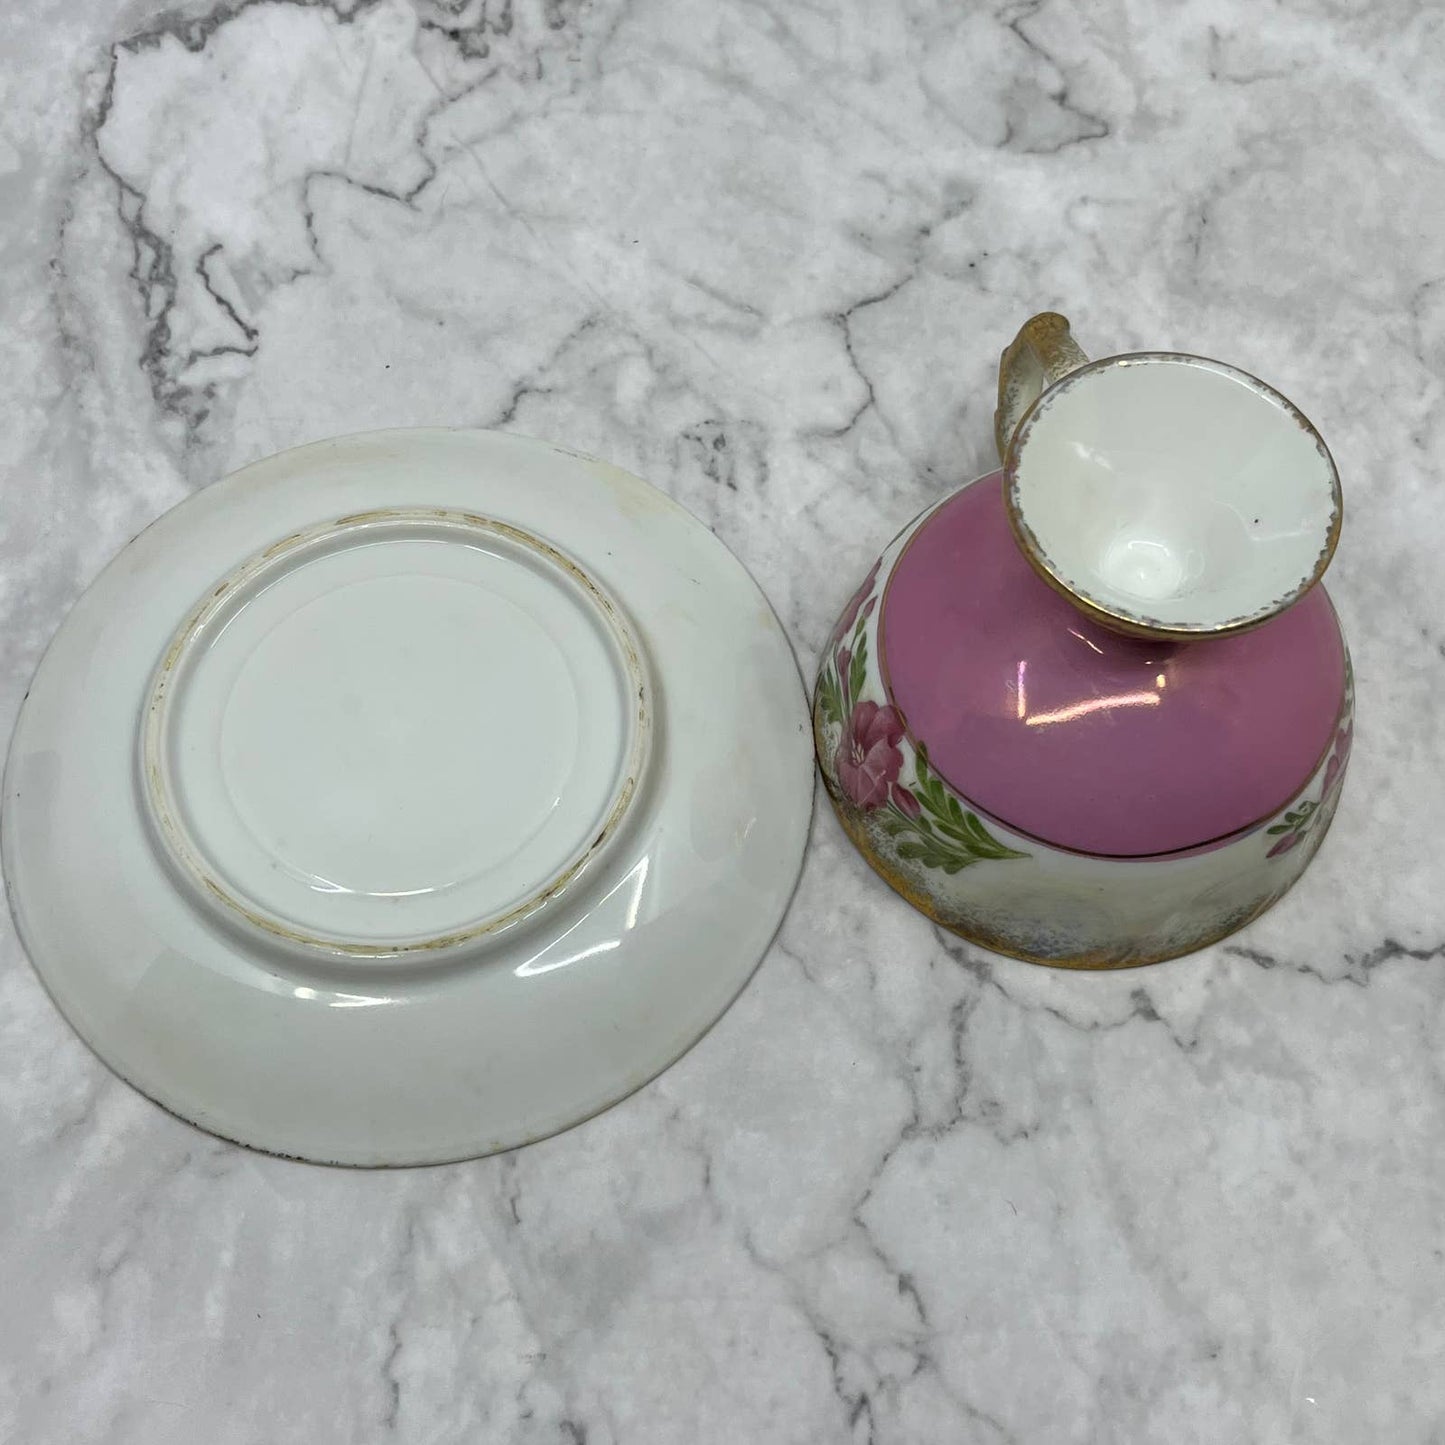 Vintage Lustreware Iridescent ￼Bone China Footed Floral Teacup & Saucer TA7